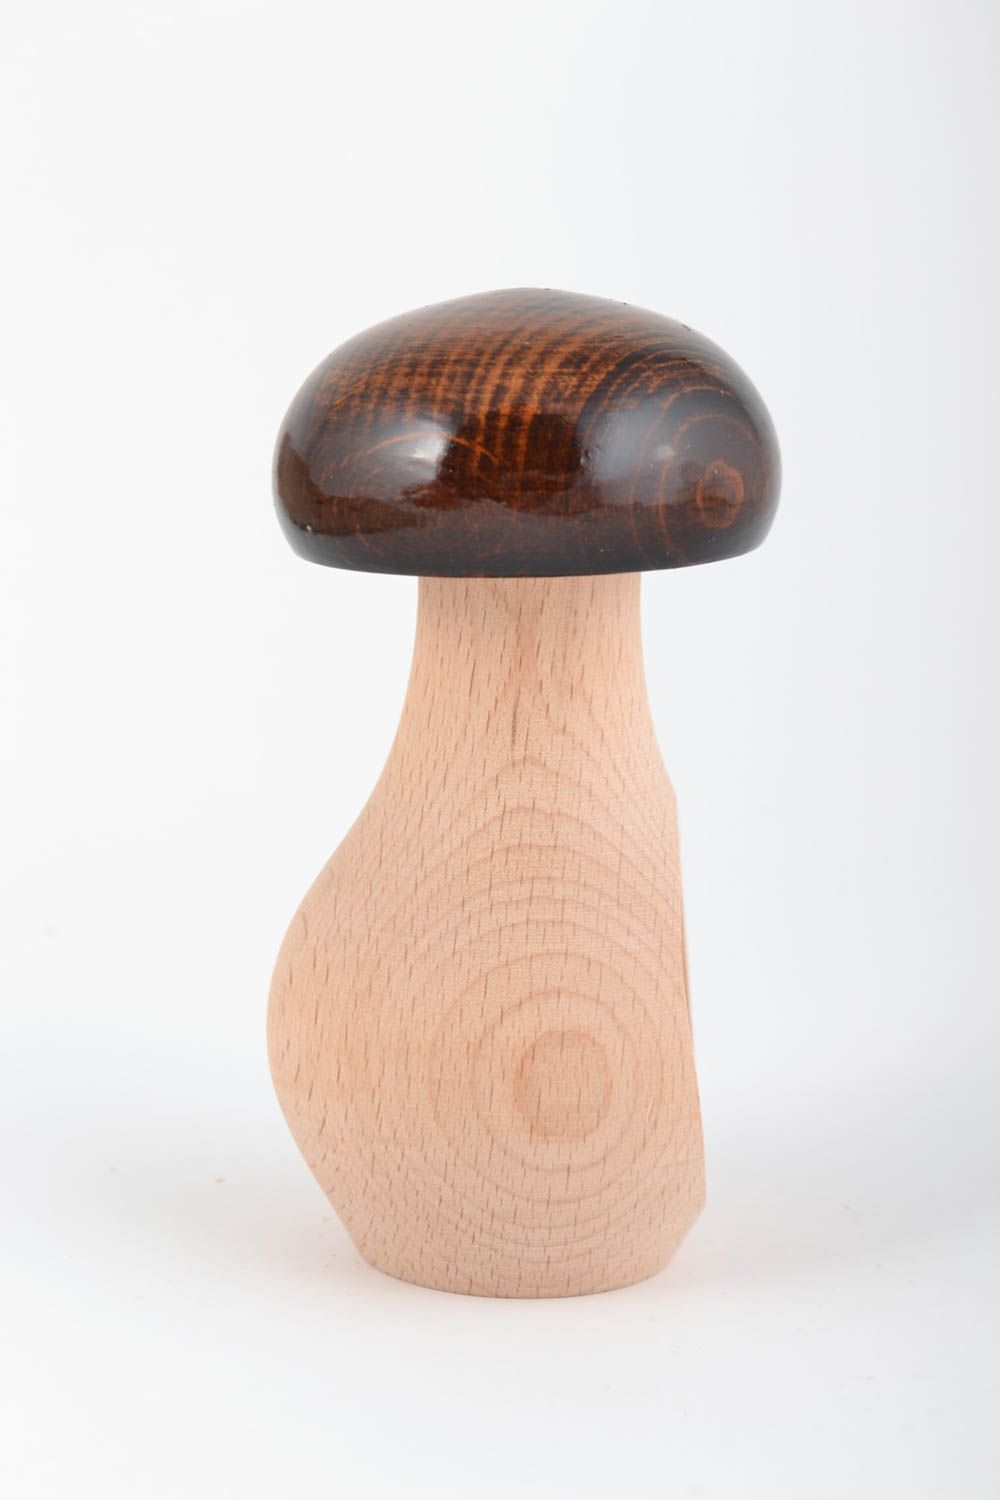 Schöner lackierter handmade Pilz Nussknacker aus Holz im Öko Stil foto 3